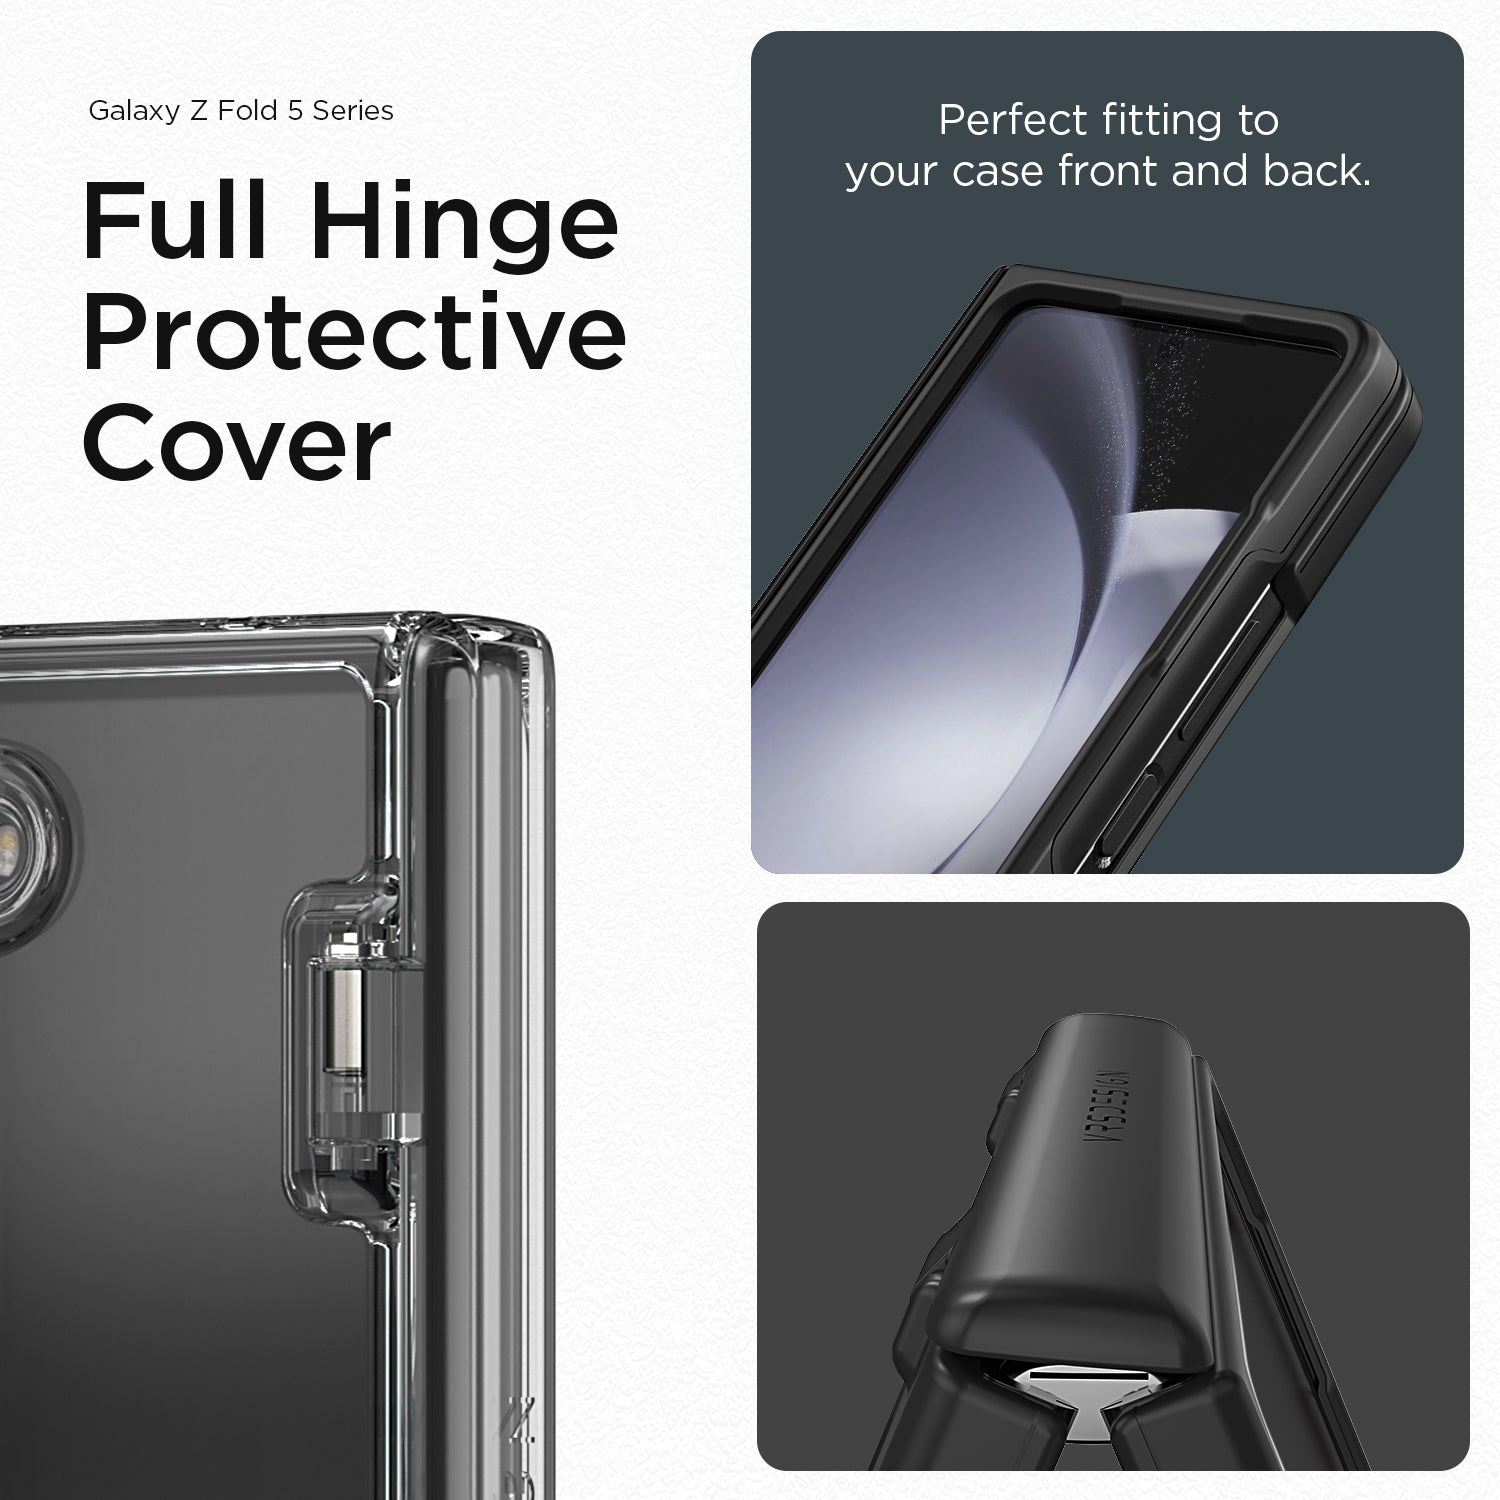 Samsung Galaxy Z Fold 5 slim rugged case multiple durable convenience card wallet storage sleek design minimalist modern women color perfect